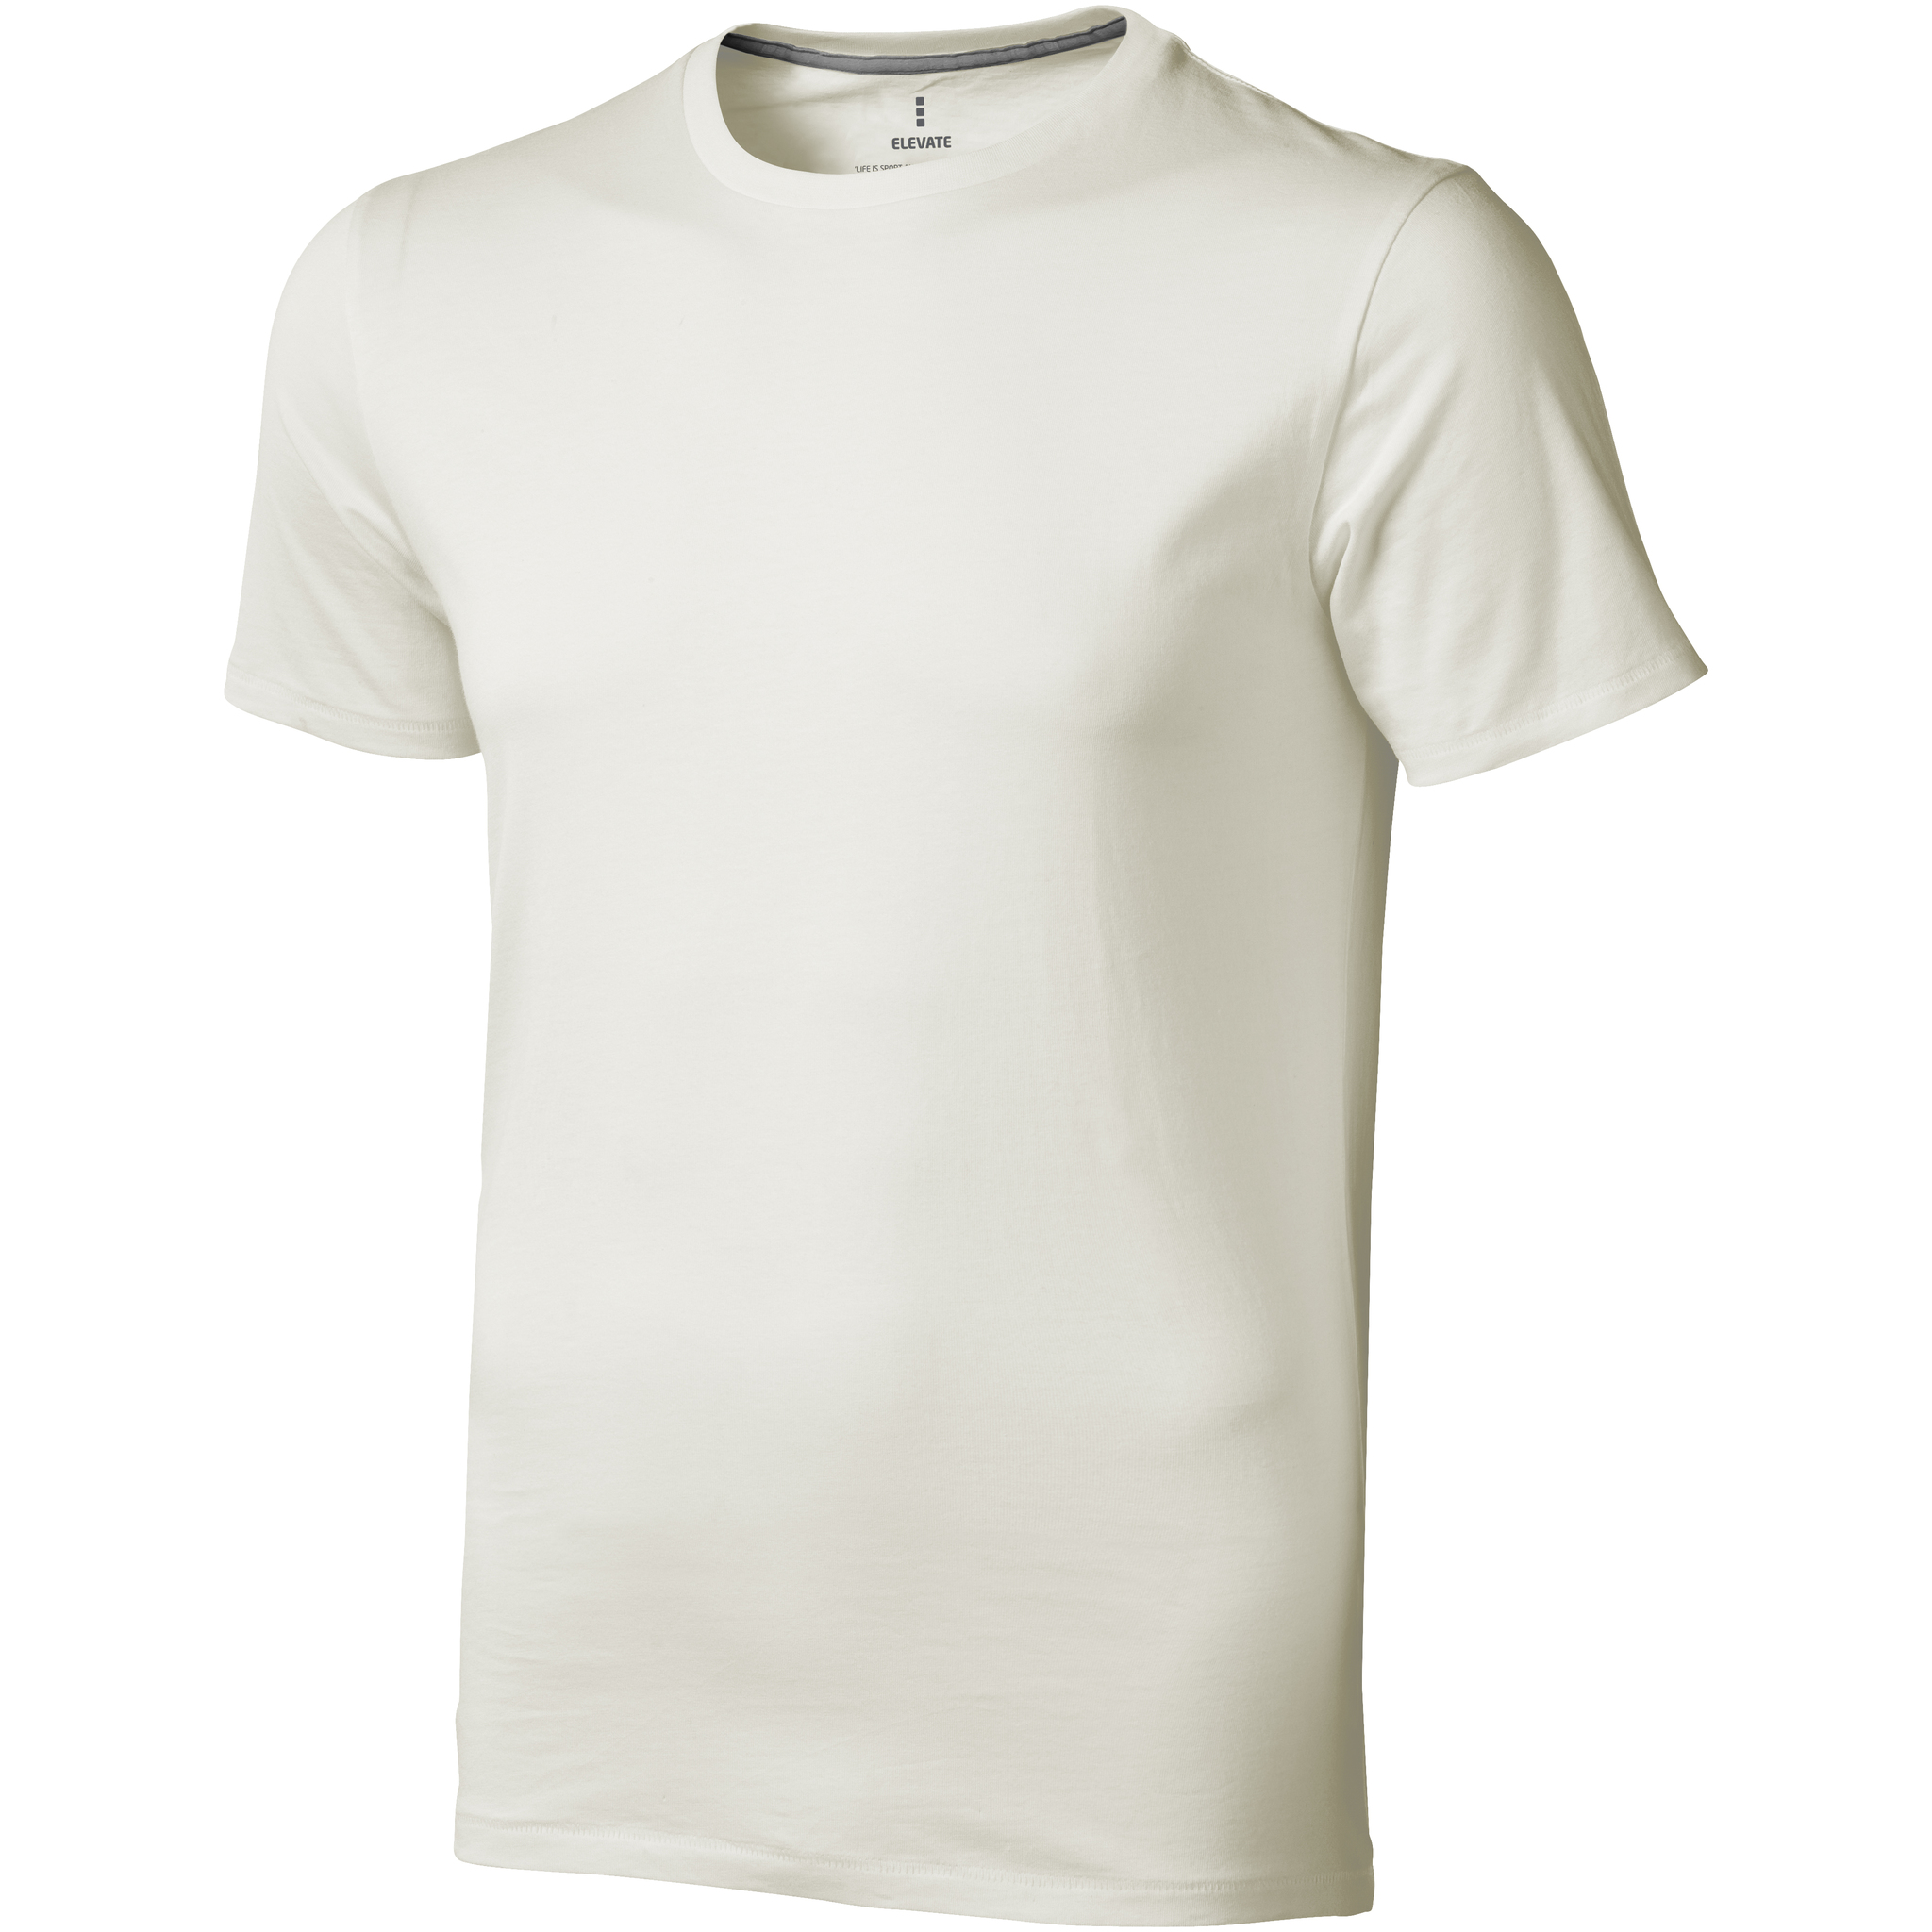 Футболка светло серая. Светлая футболка мужская. Nanaimo мужская футболка с коротким рукавом. Светло серая футболка мужская. Футболка свободного кроя мужская.